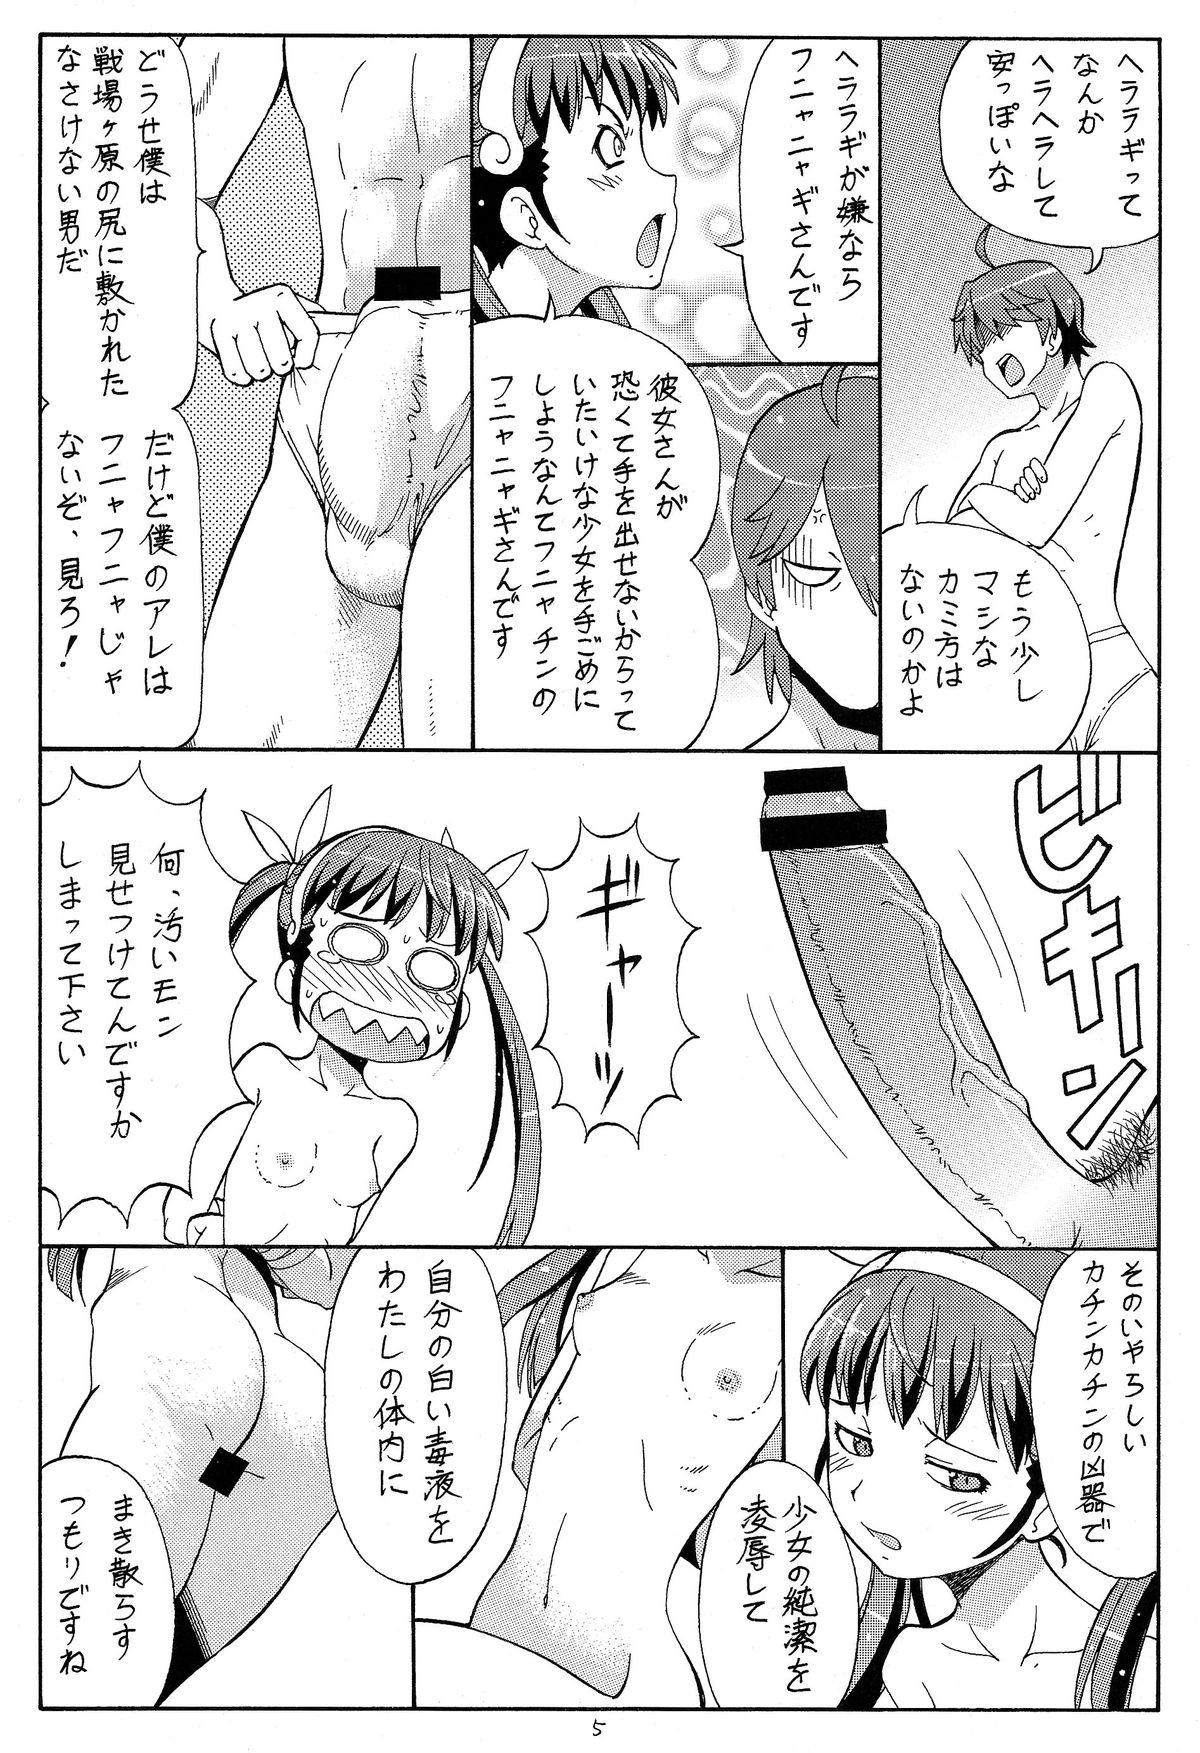 Picked Up Hito ni Hakanai to Kaite "Araragi" to Yomu 4 - Bakemonogatari Chastity - Page 7